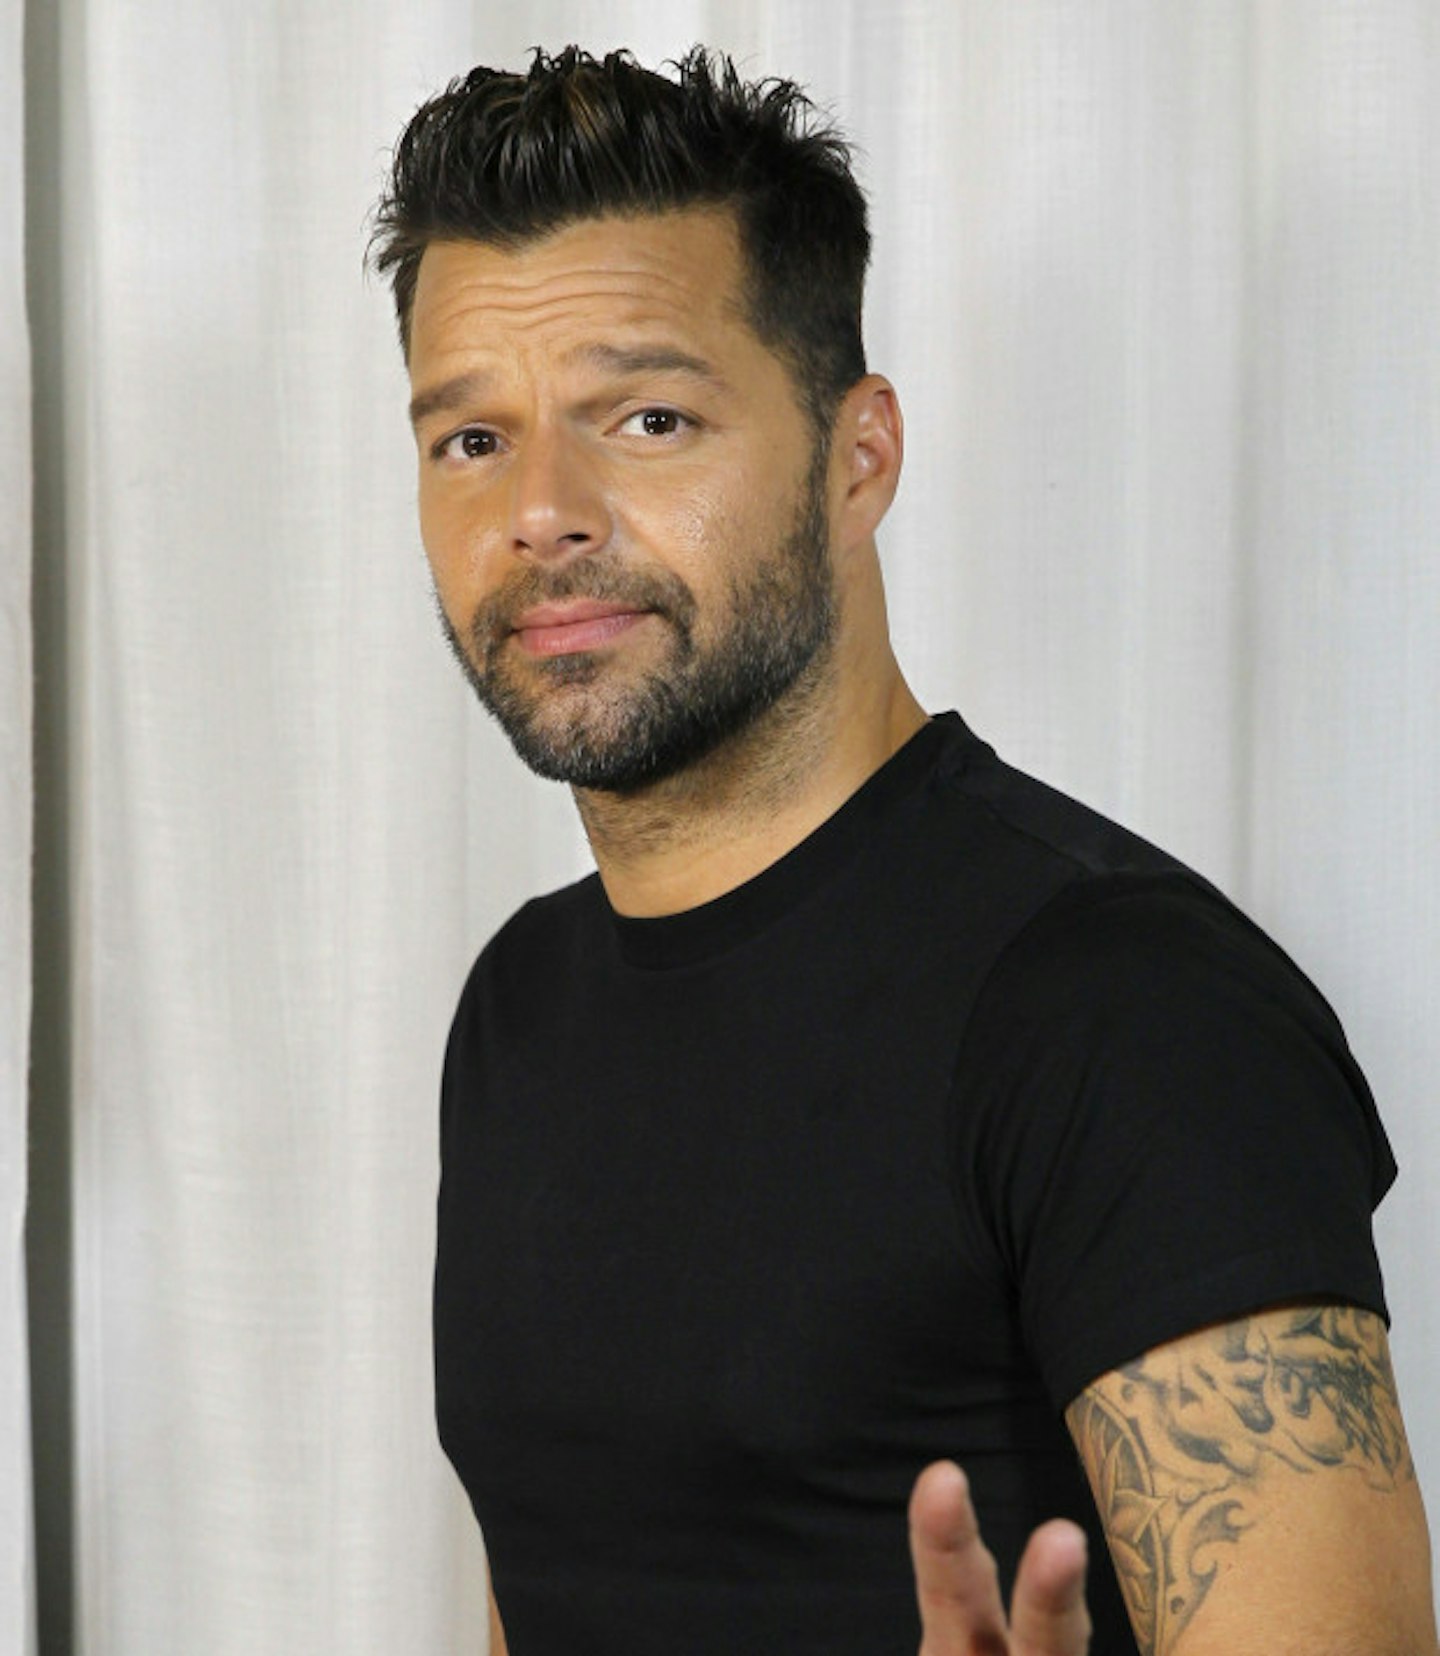 60. Ricky Martin